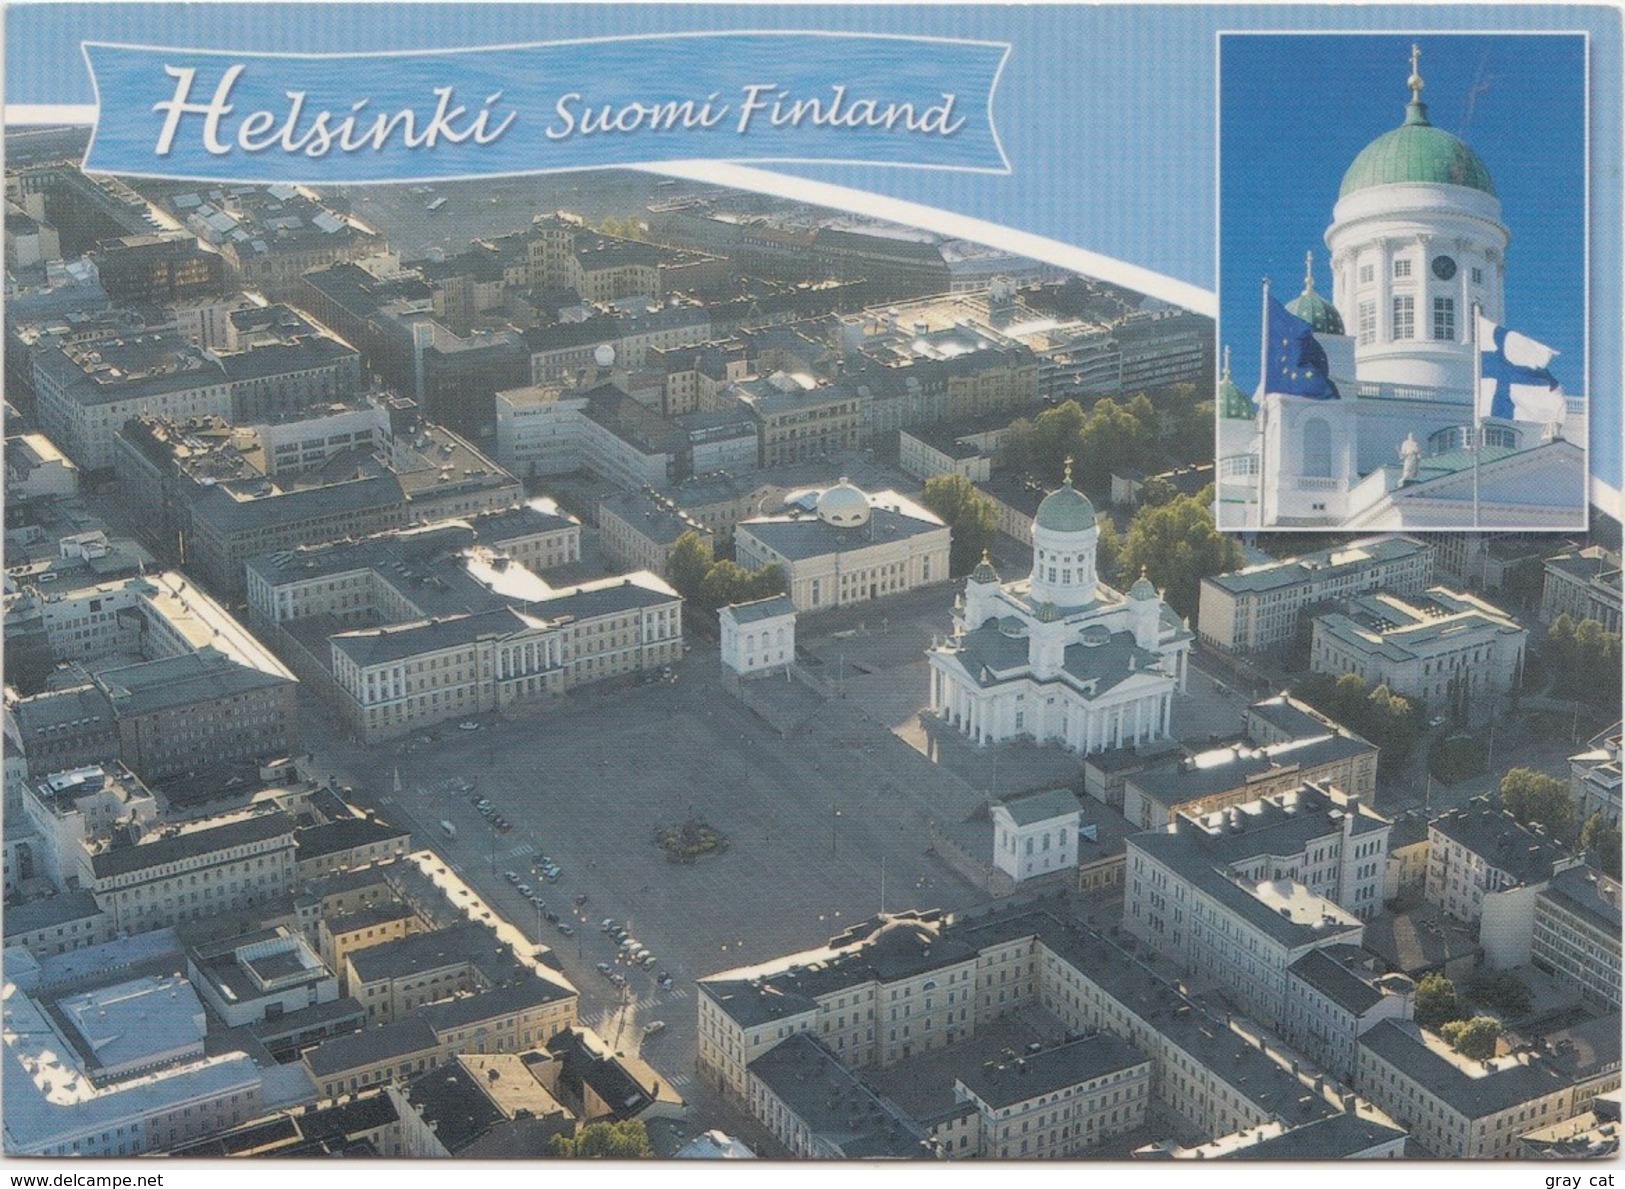 Helsinki, Suomi Finland, Used Postcard [20159] - Finland